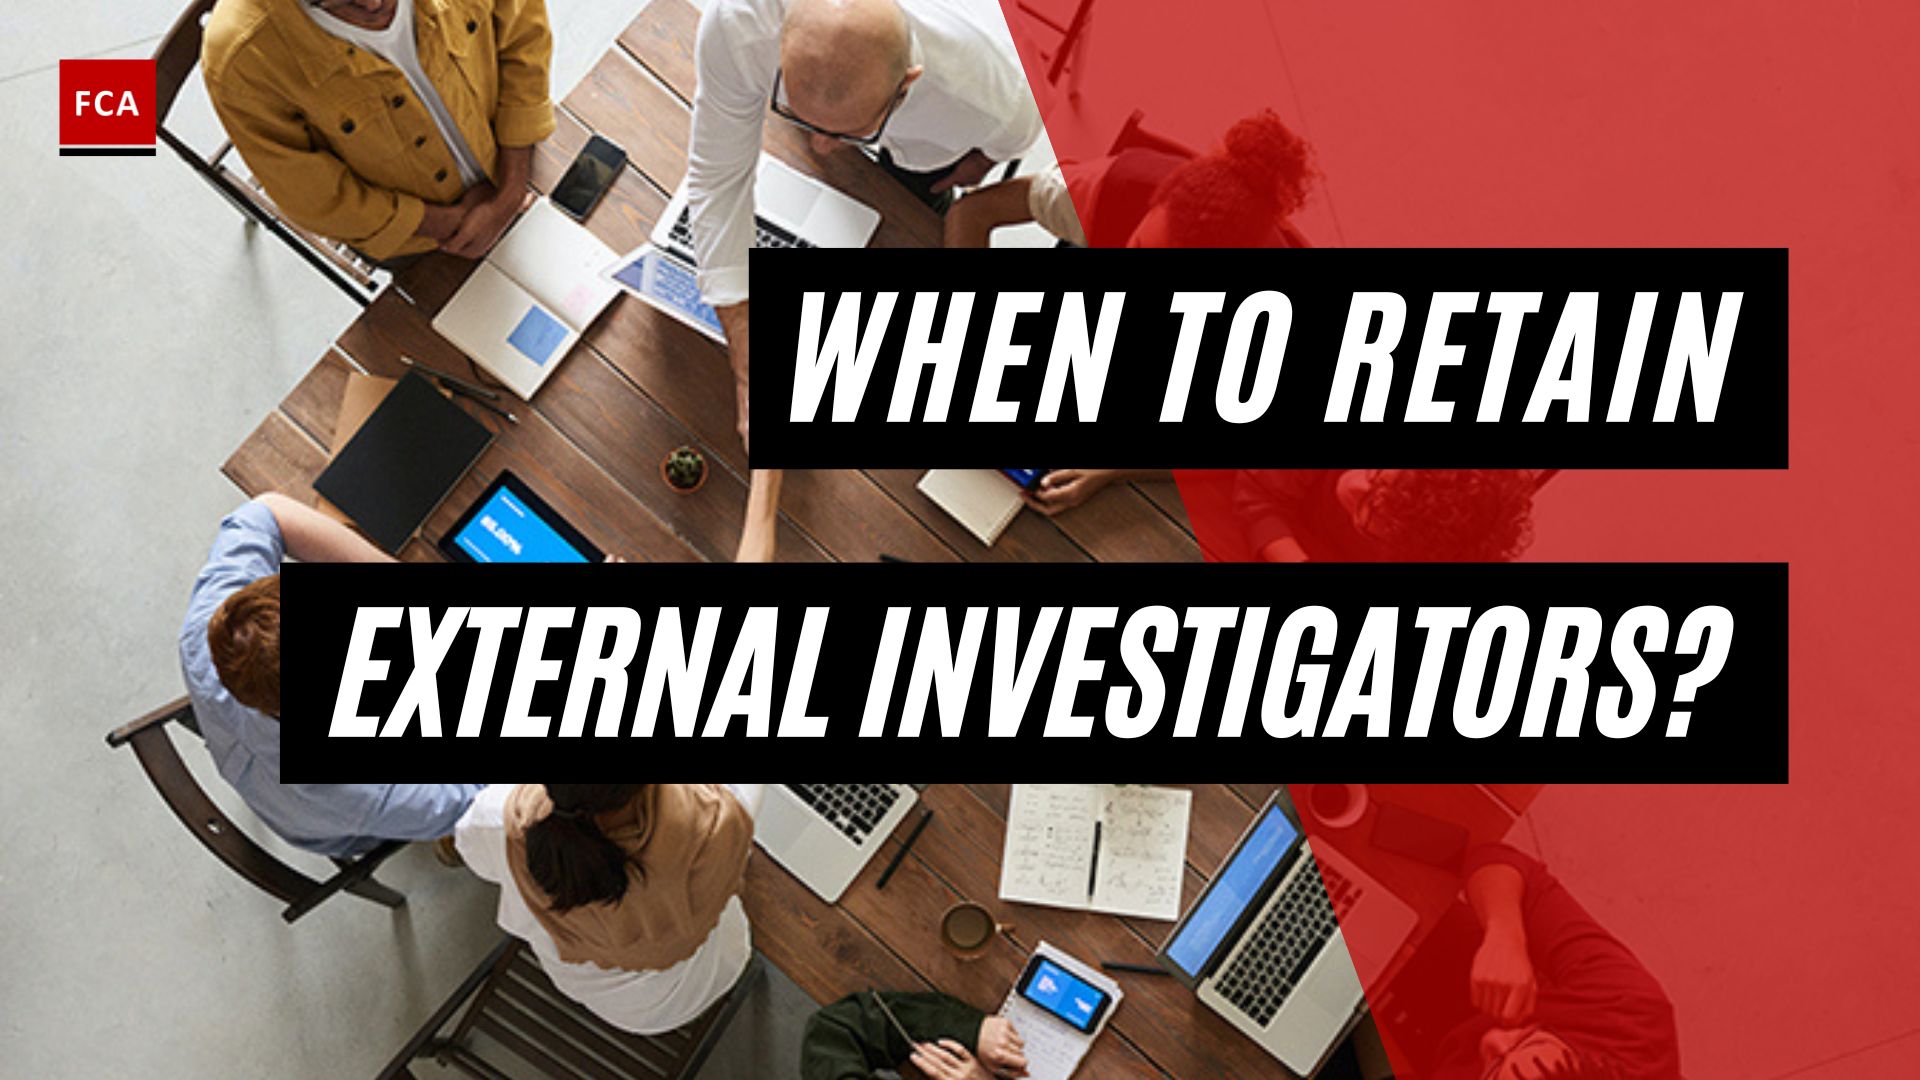 When To Retain External Investigators?